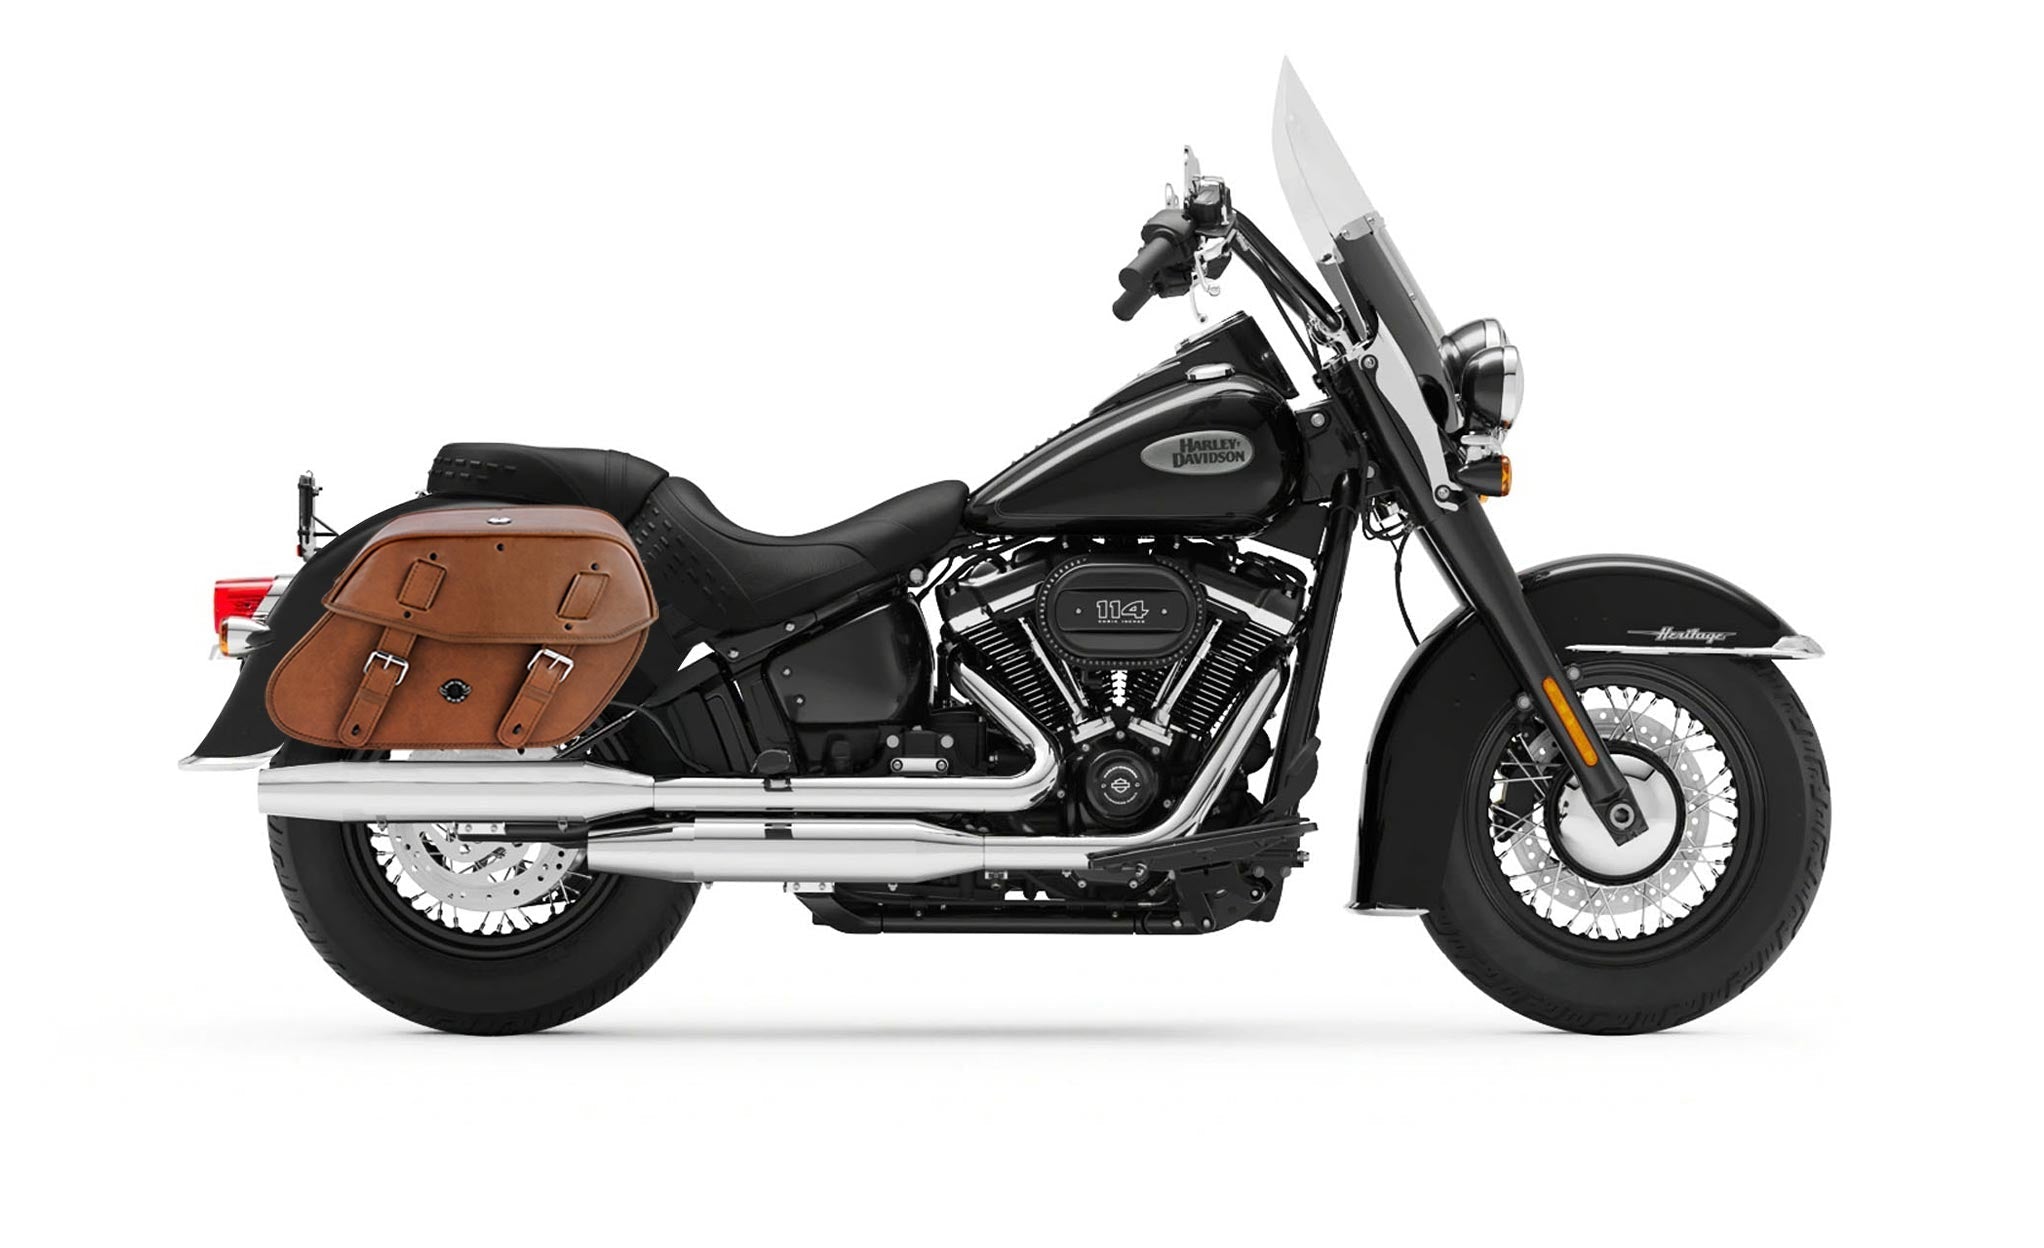 Viking Odin Brown Large Leather Motorcycle Saddlebags For Harley Softail Heritage Flst I C Ci on Bike Photo @expand